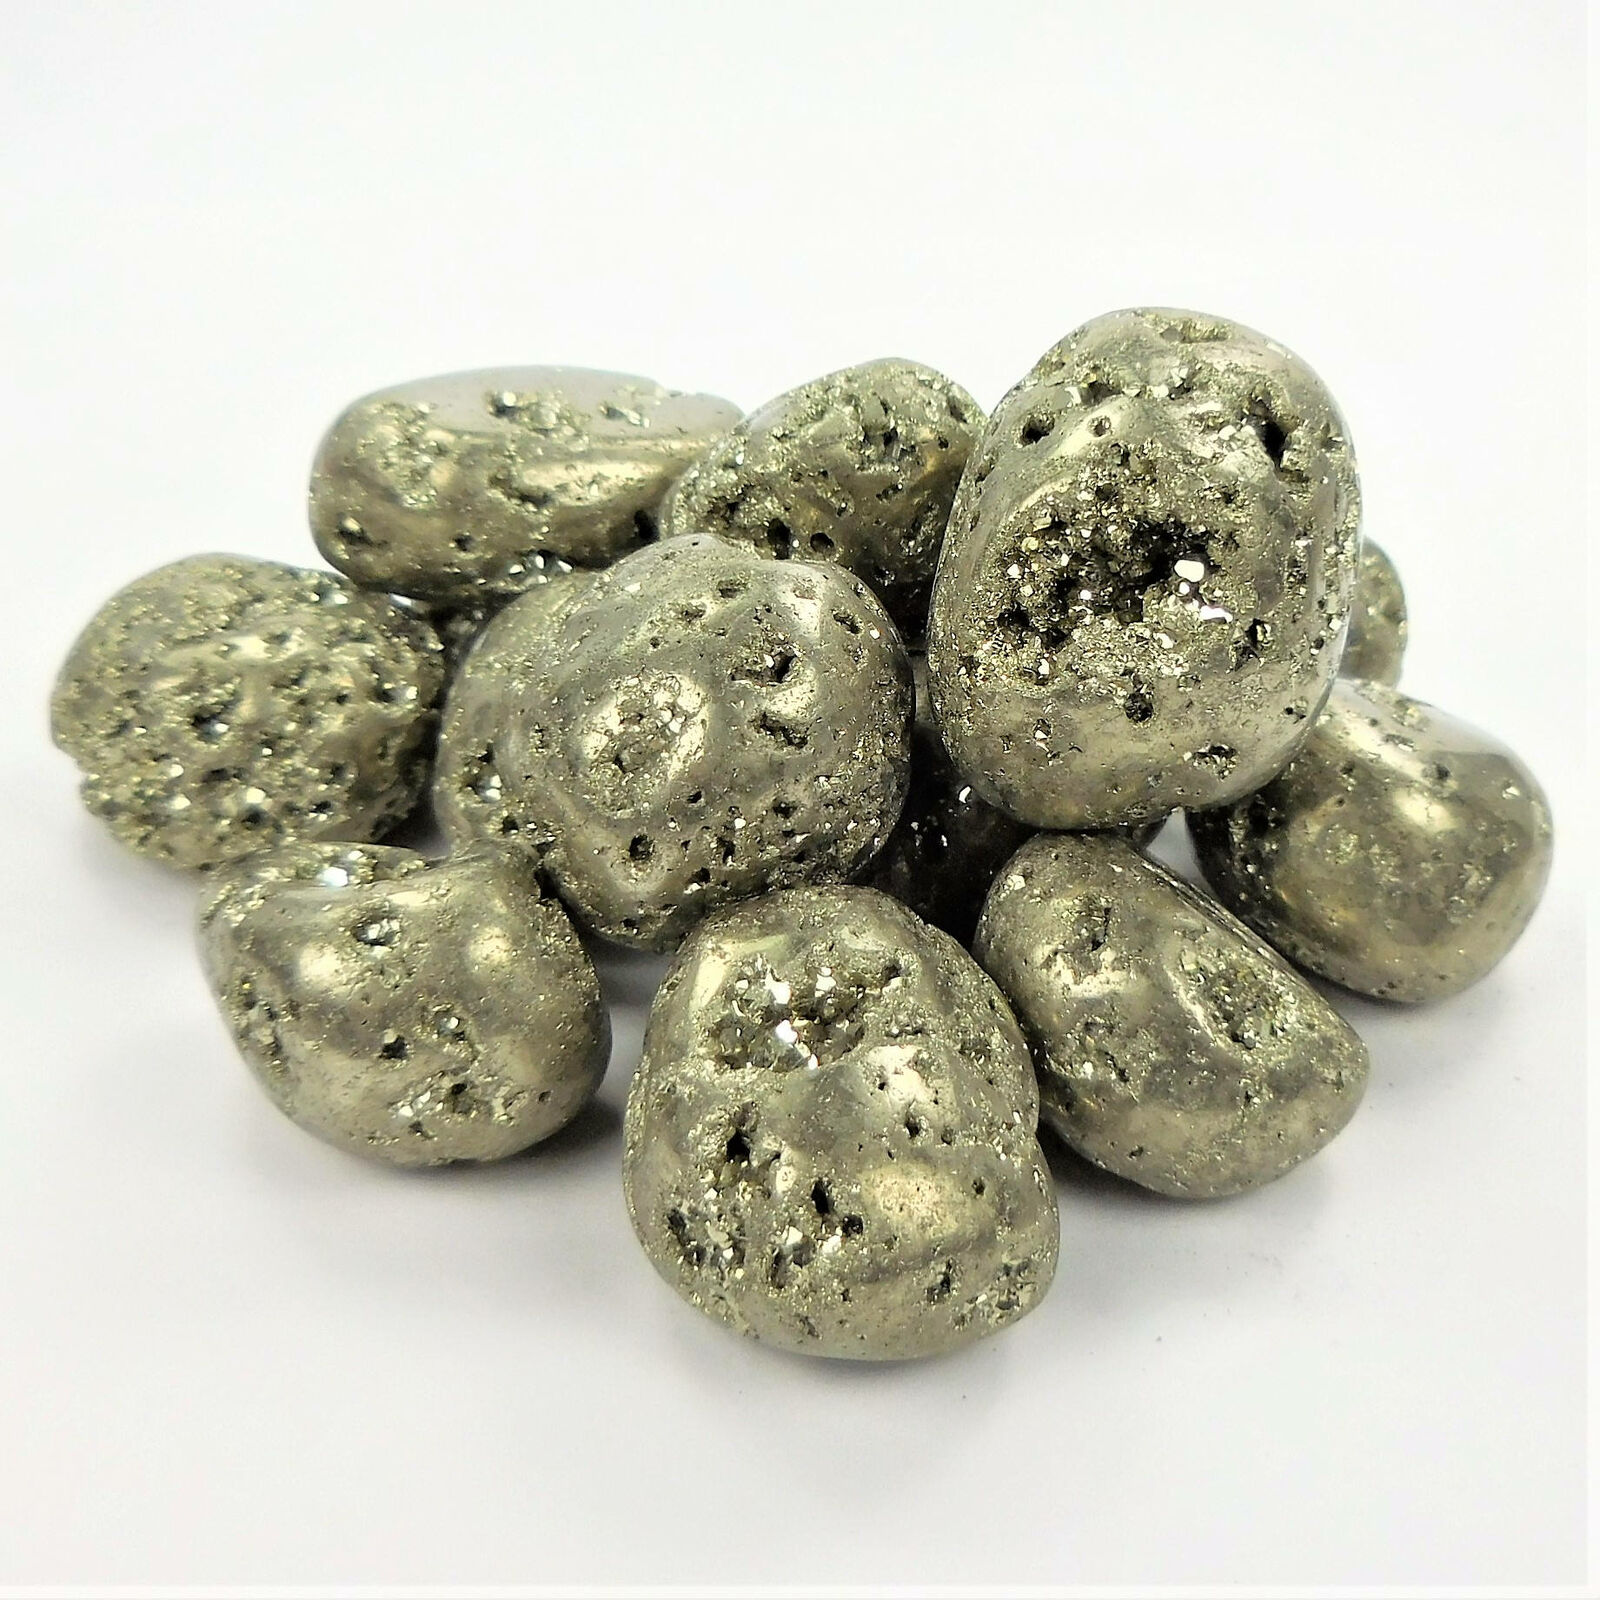 Tumbled Iron Pyrite Druzy Crystal Stones (3 Pcs) Fools Gold Polished Gemstones